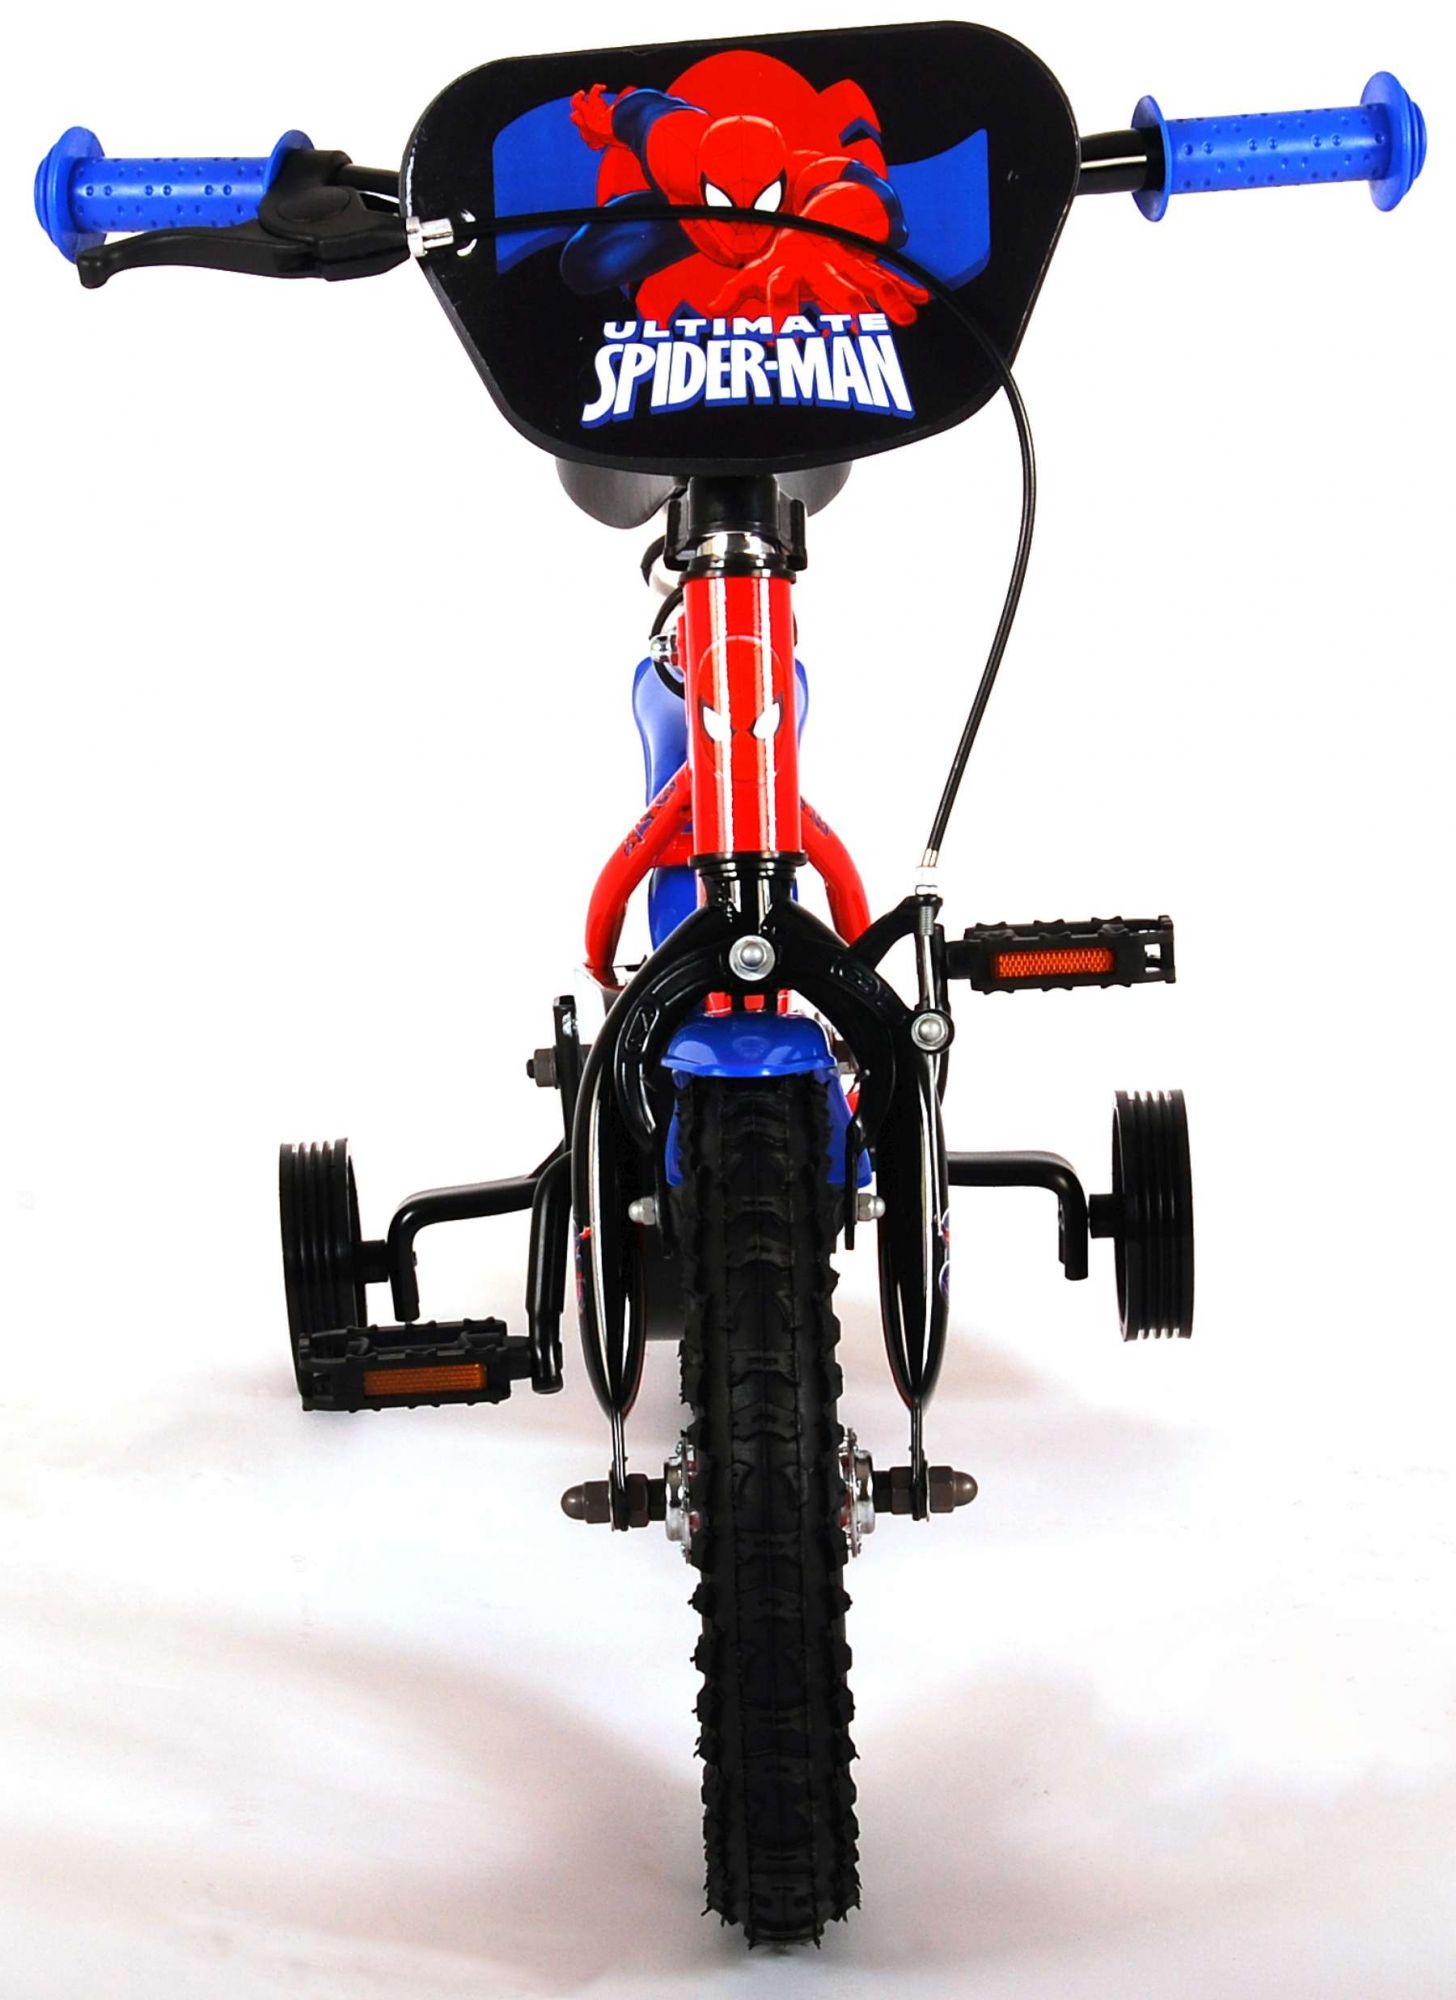 12 inch spiderman bike